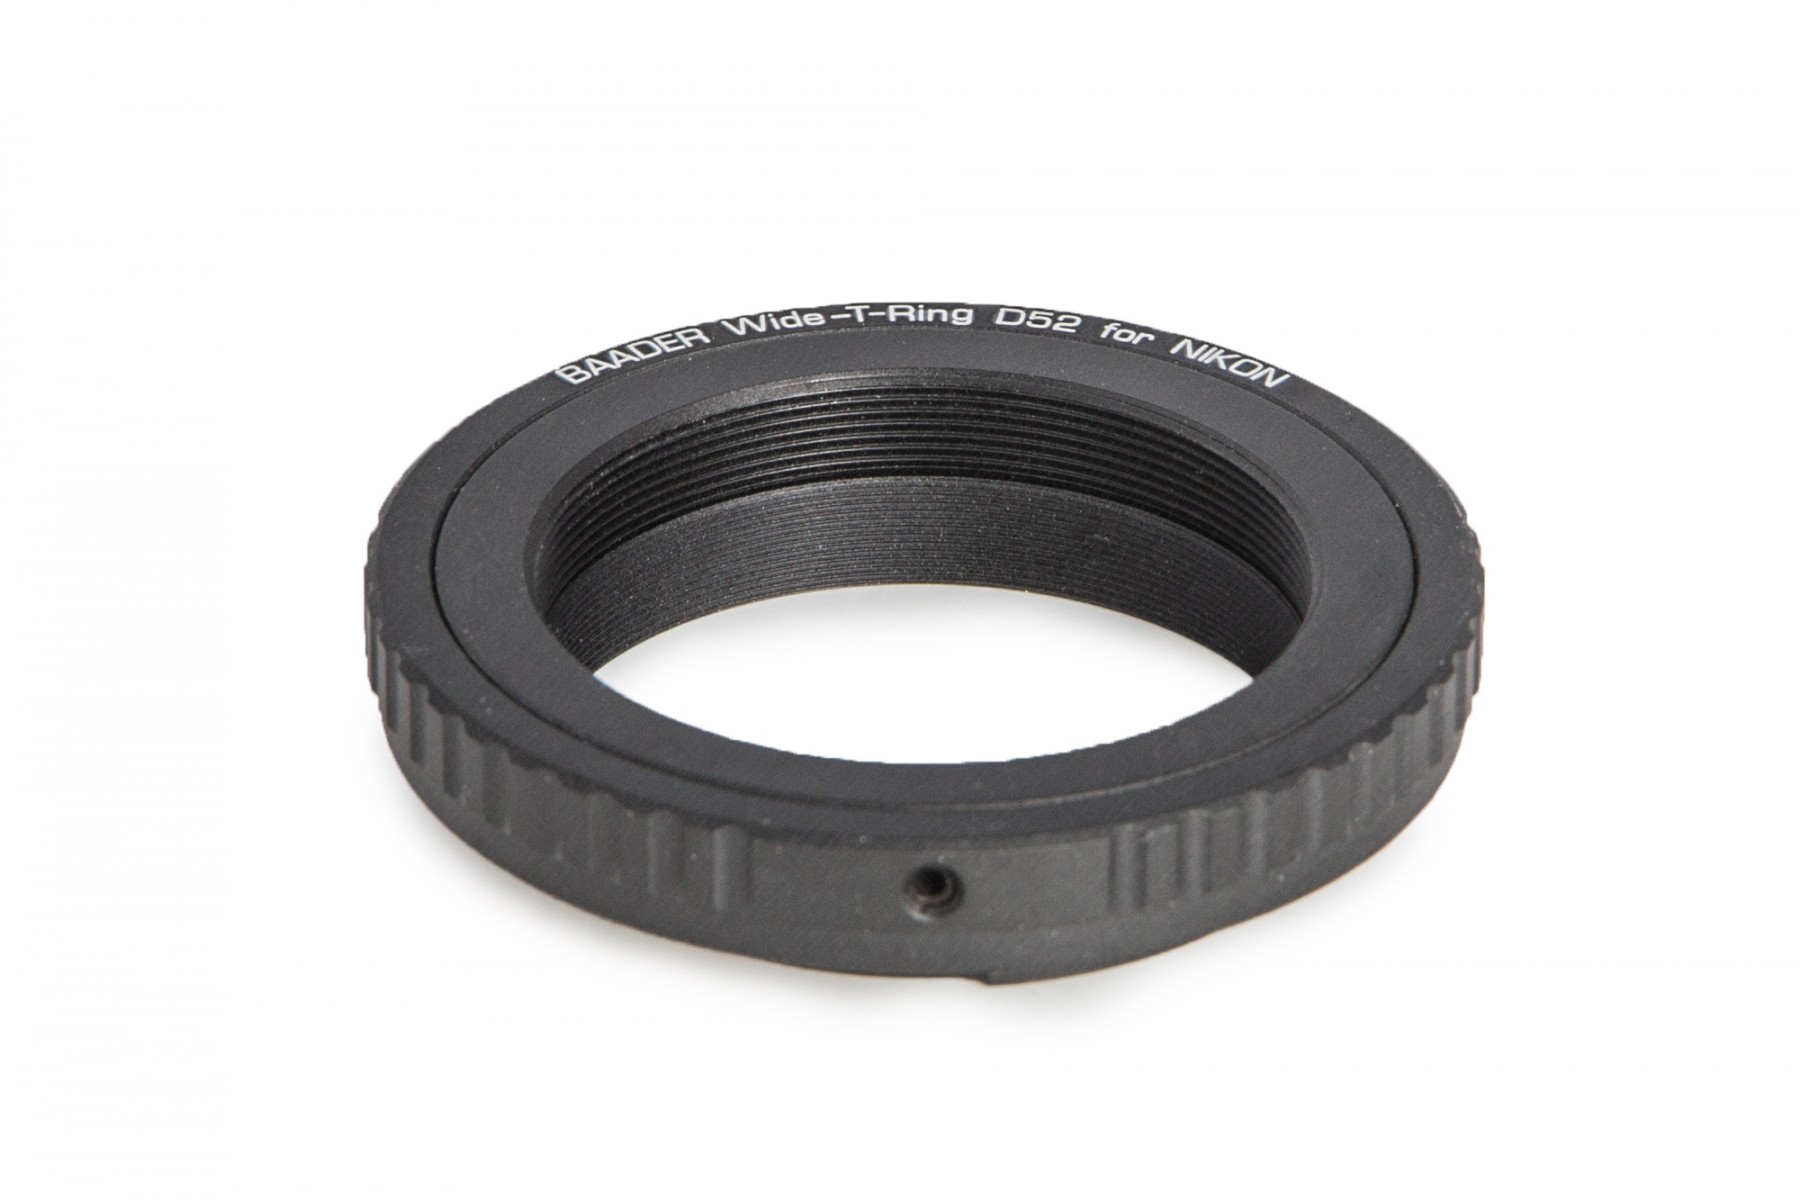 Astromania Metal T-Ring Adapter for Nikon DSLR/SLR Fits All Nikon DSLR/SLR Cameras 